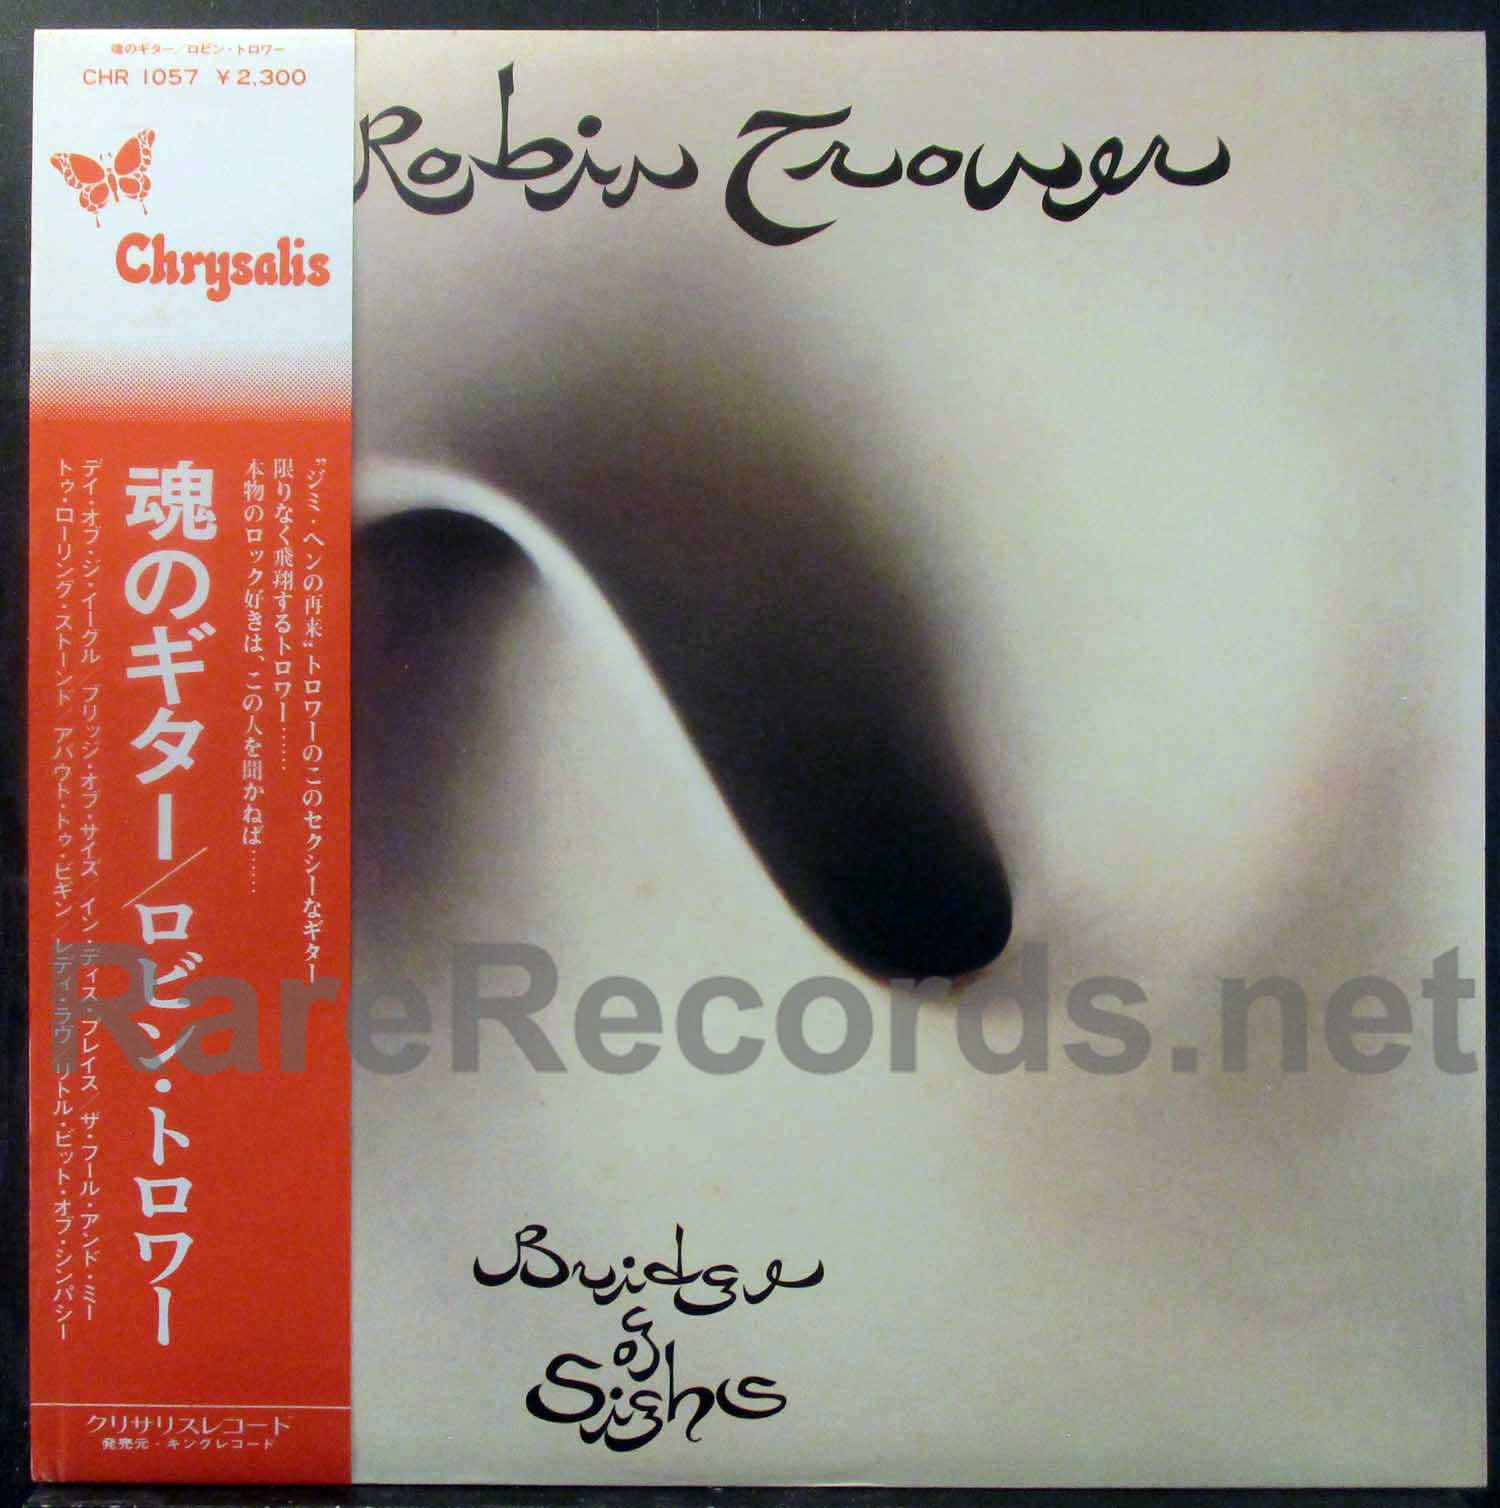 Robin Trower – Bridge of Sighs original Japan LP with obi